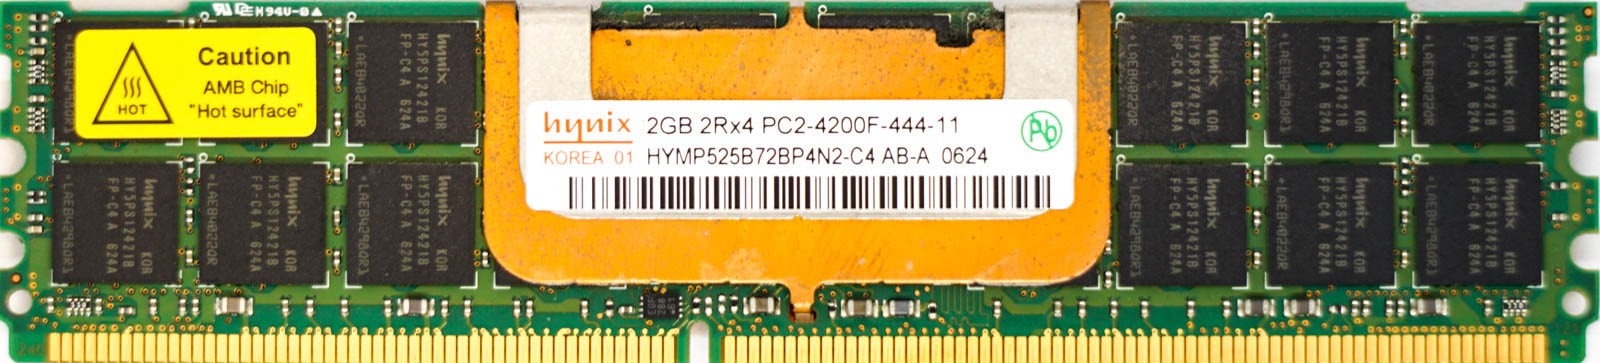 Hynix - 2GB PC2-4200F (DDR2-533Mhz, 2RX4)